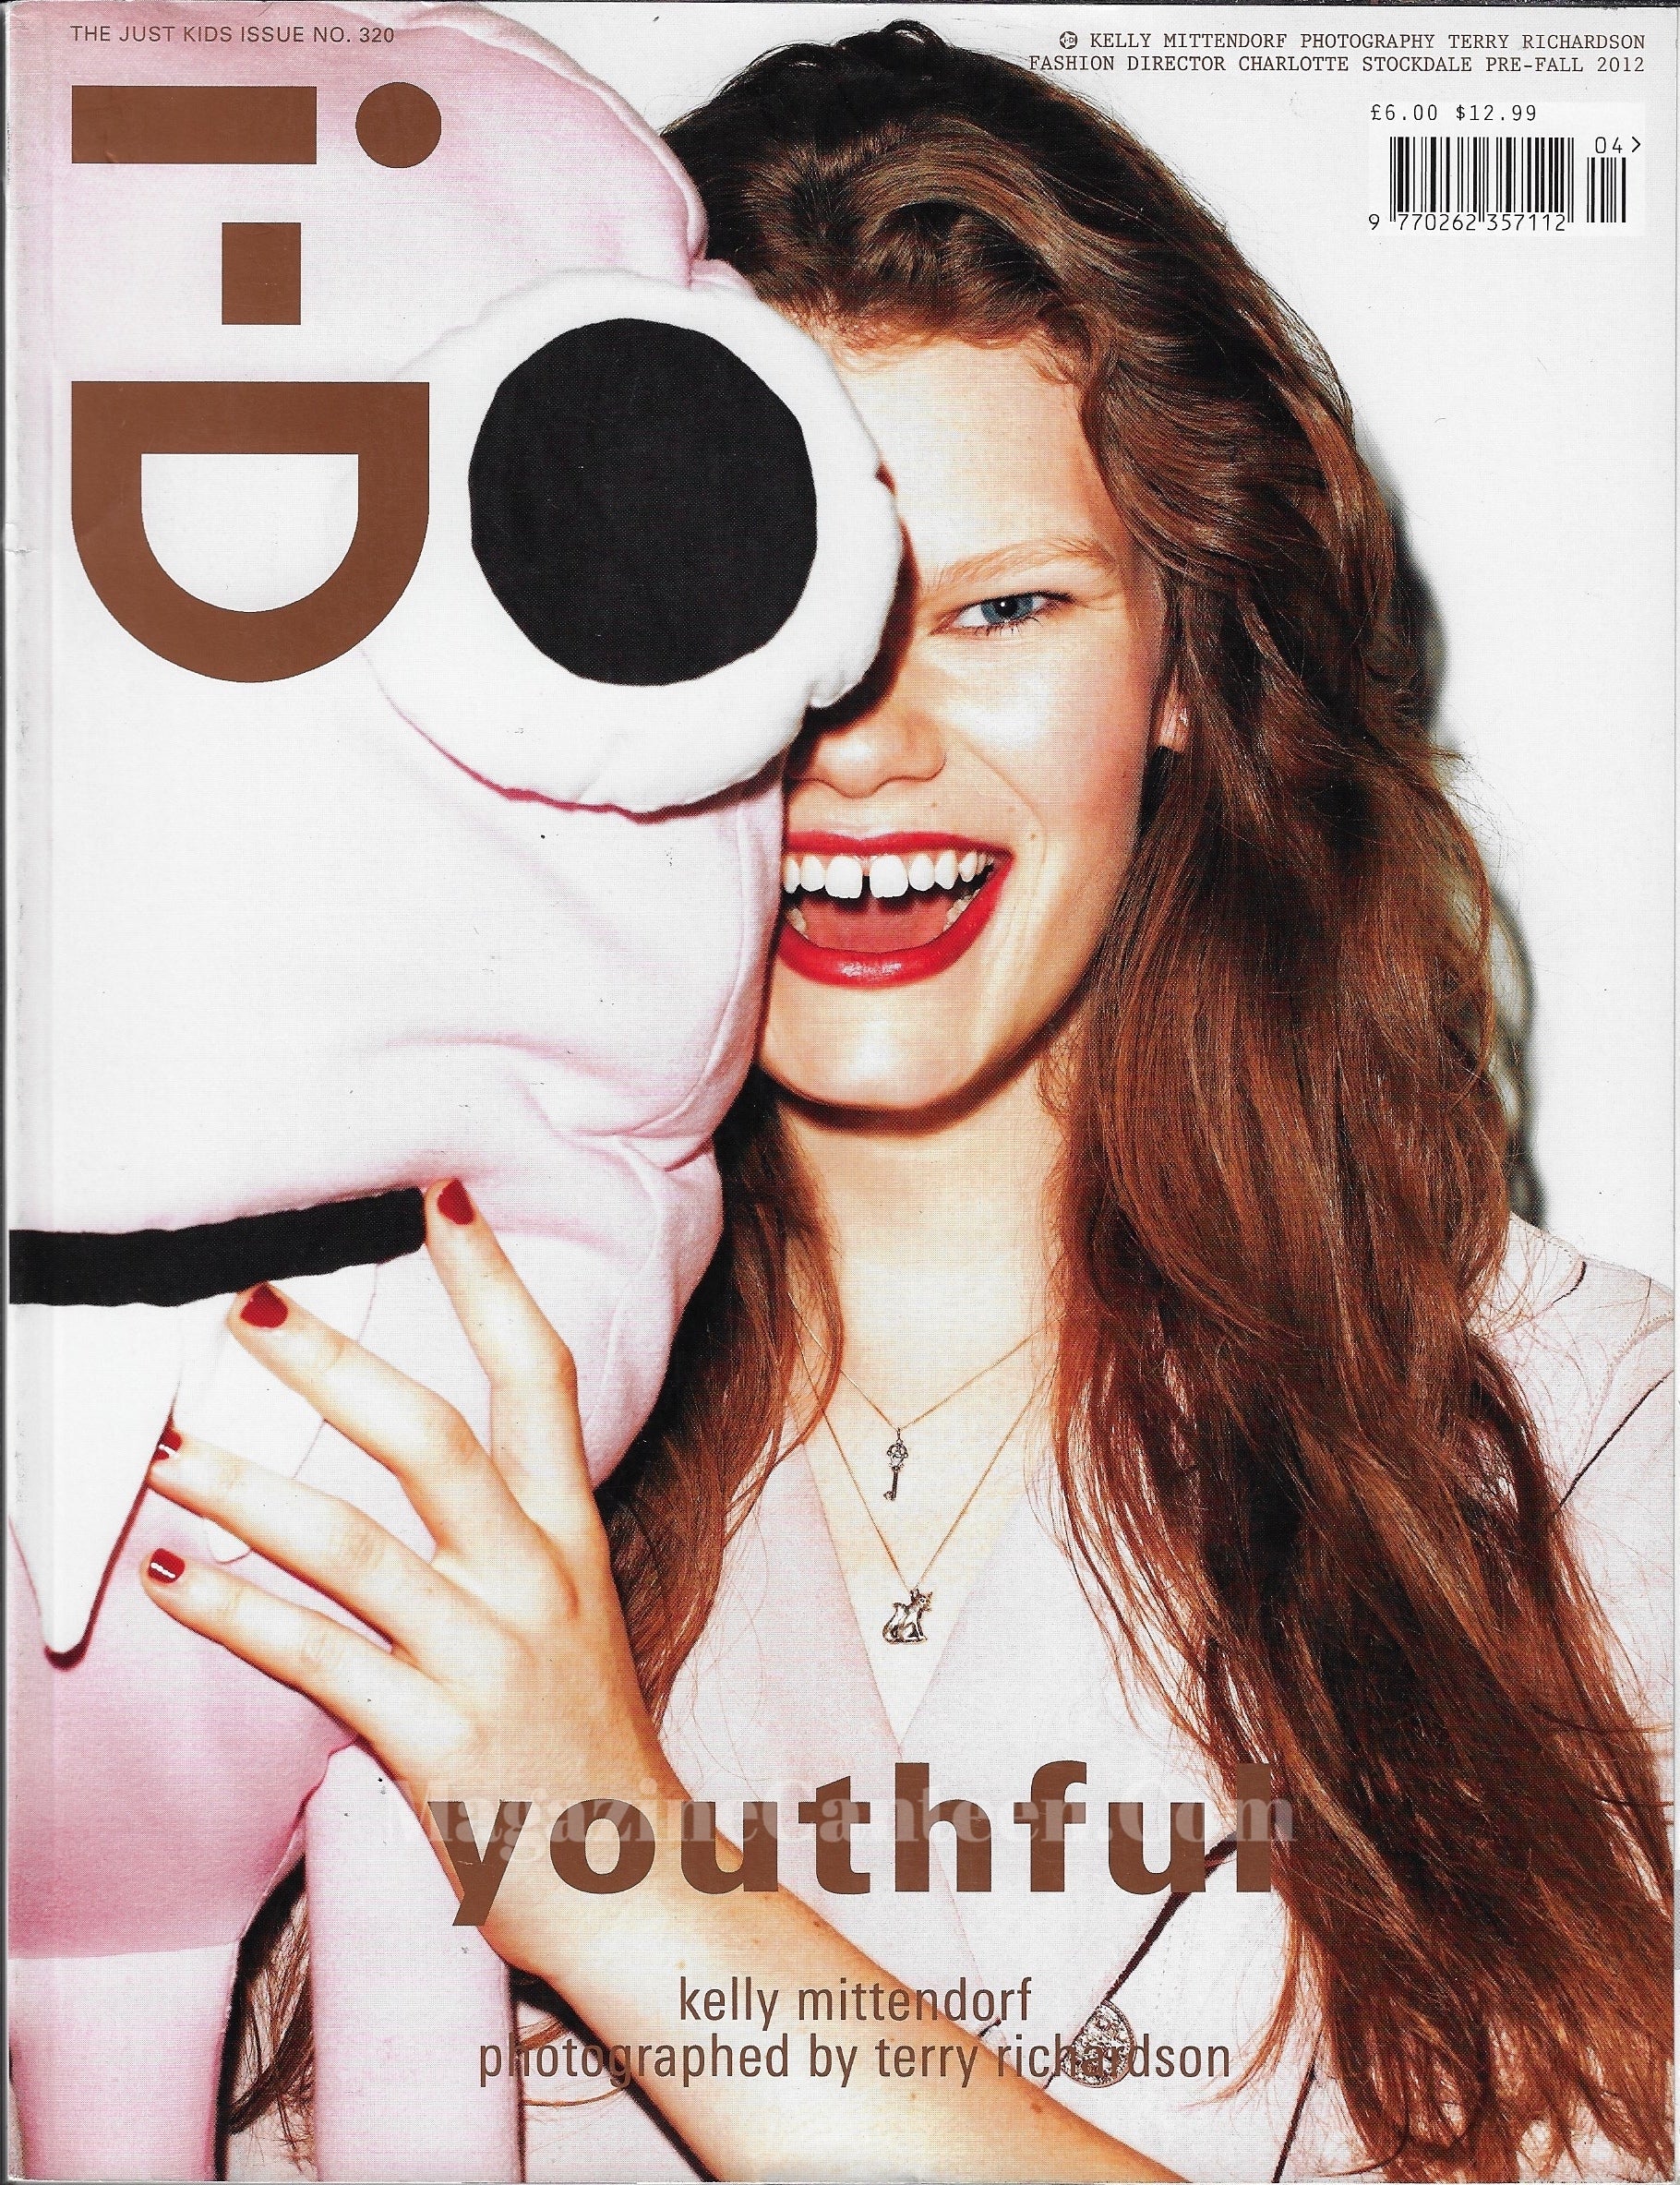 I-D Magazine 320 - Kelly Mittendorf 2012